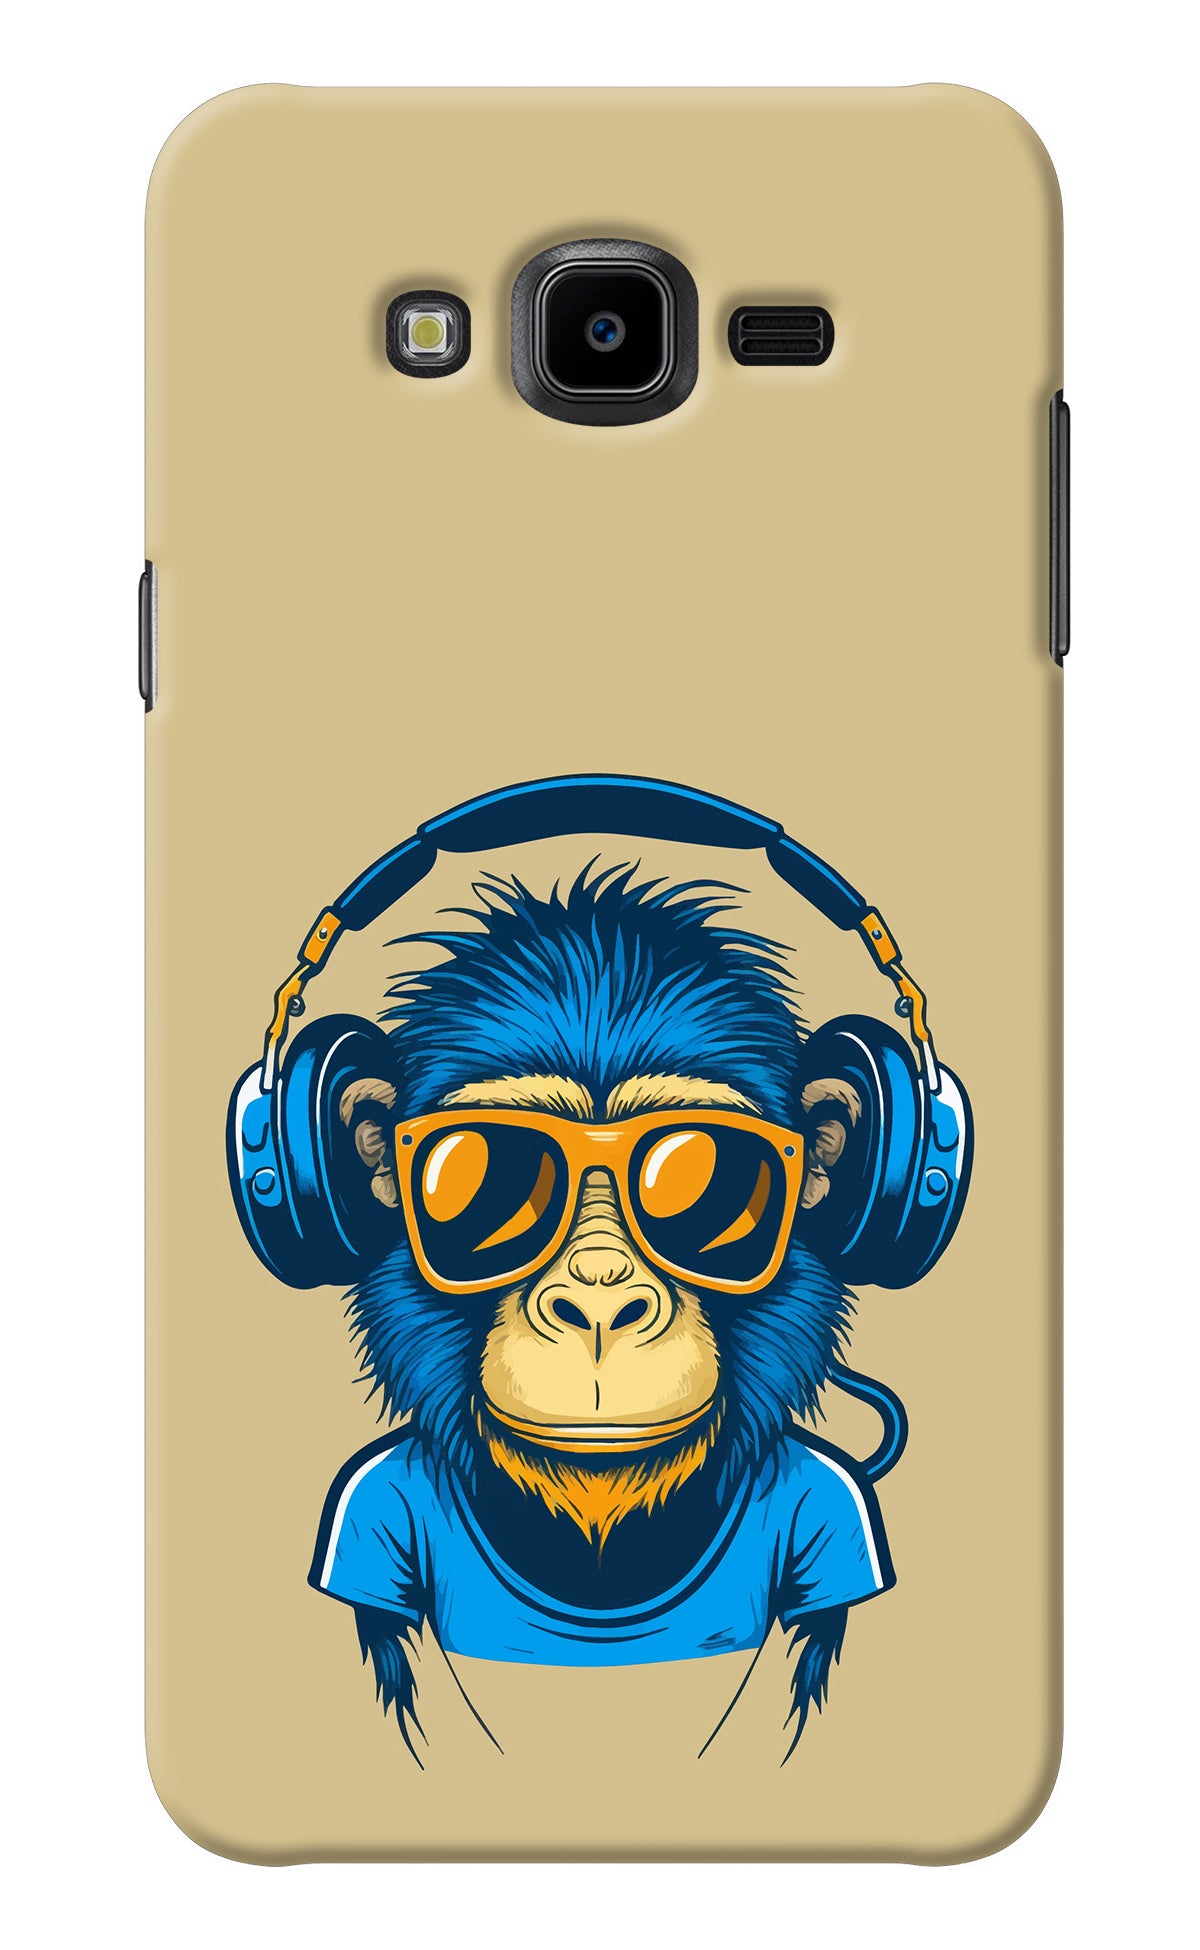 Monkey Headphone Samsung J7 Nxt Back Cover